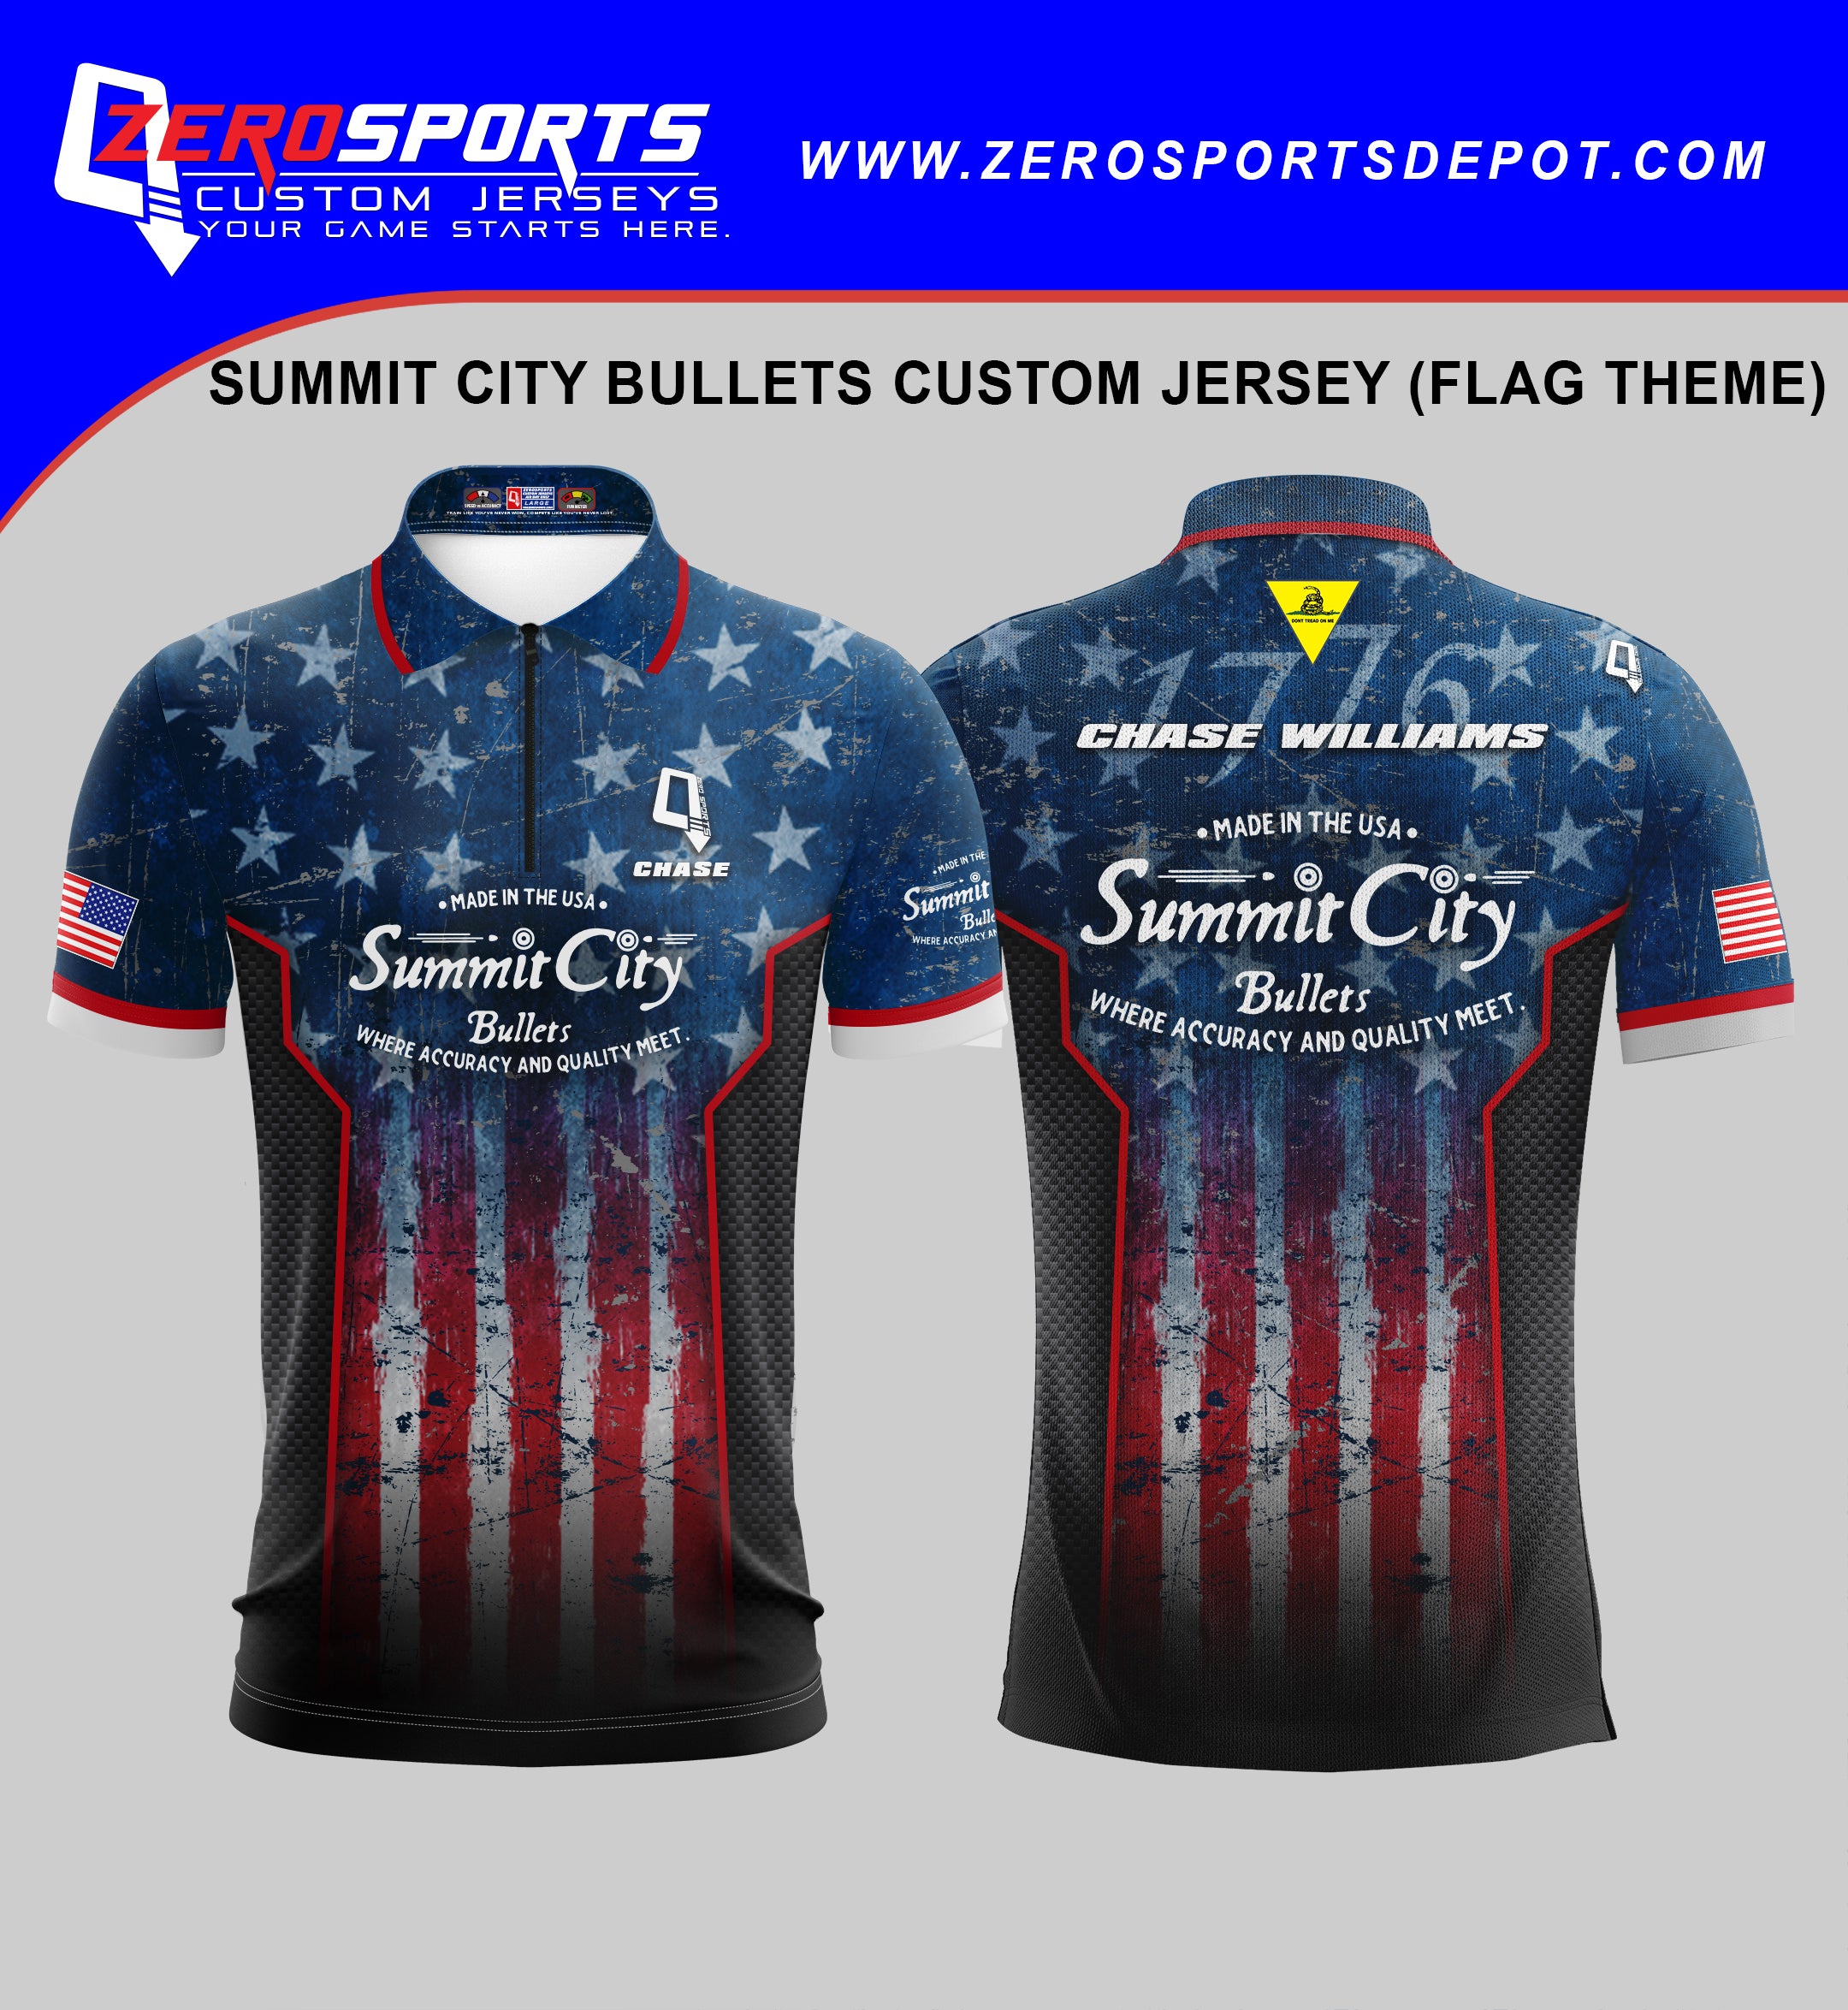 Summit City Bullets Team Jersey